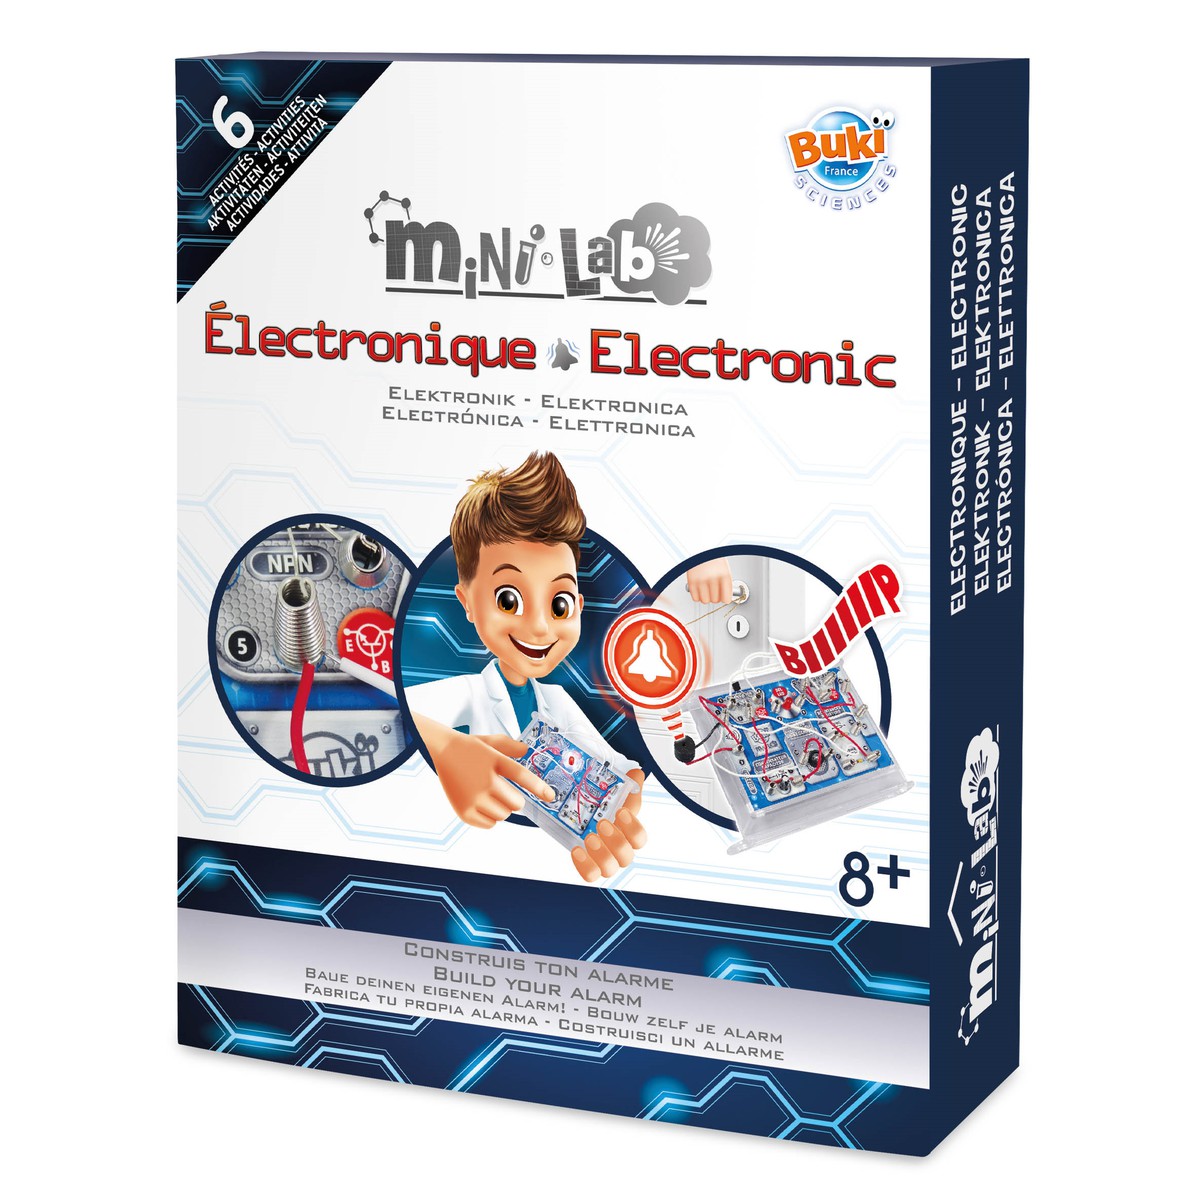 Buki France  Mini Lab Electronique  